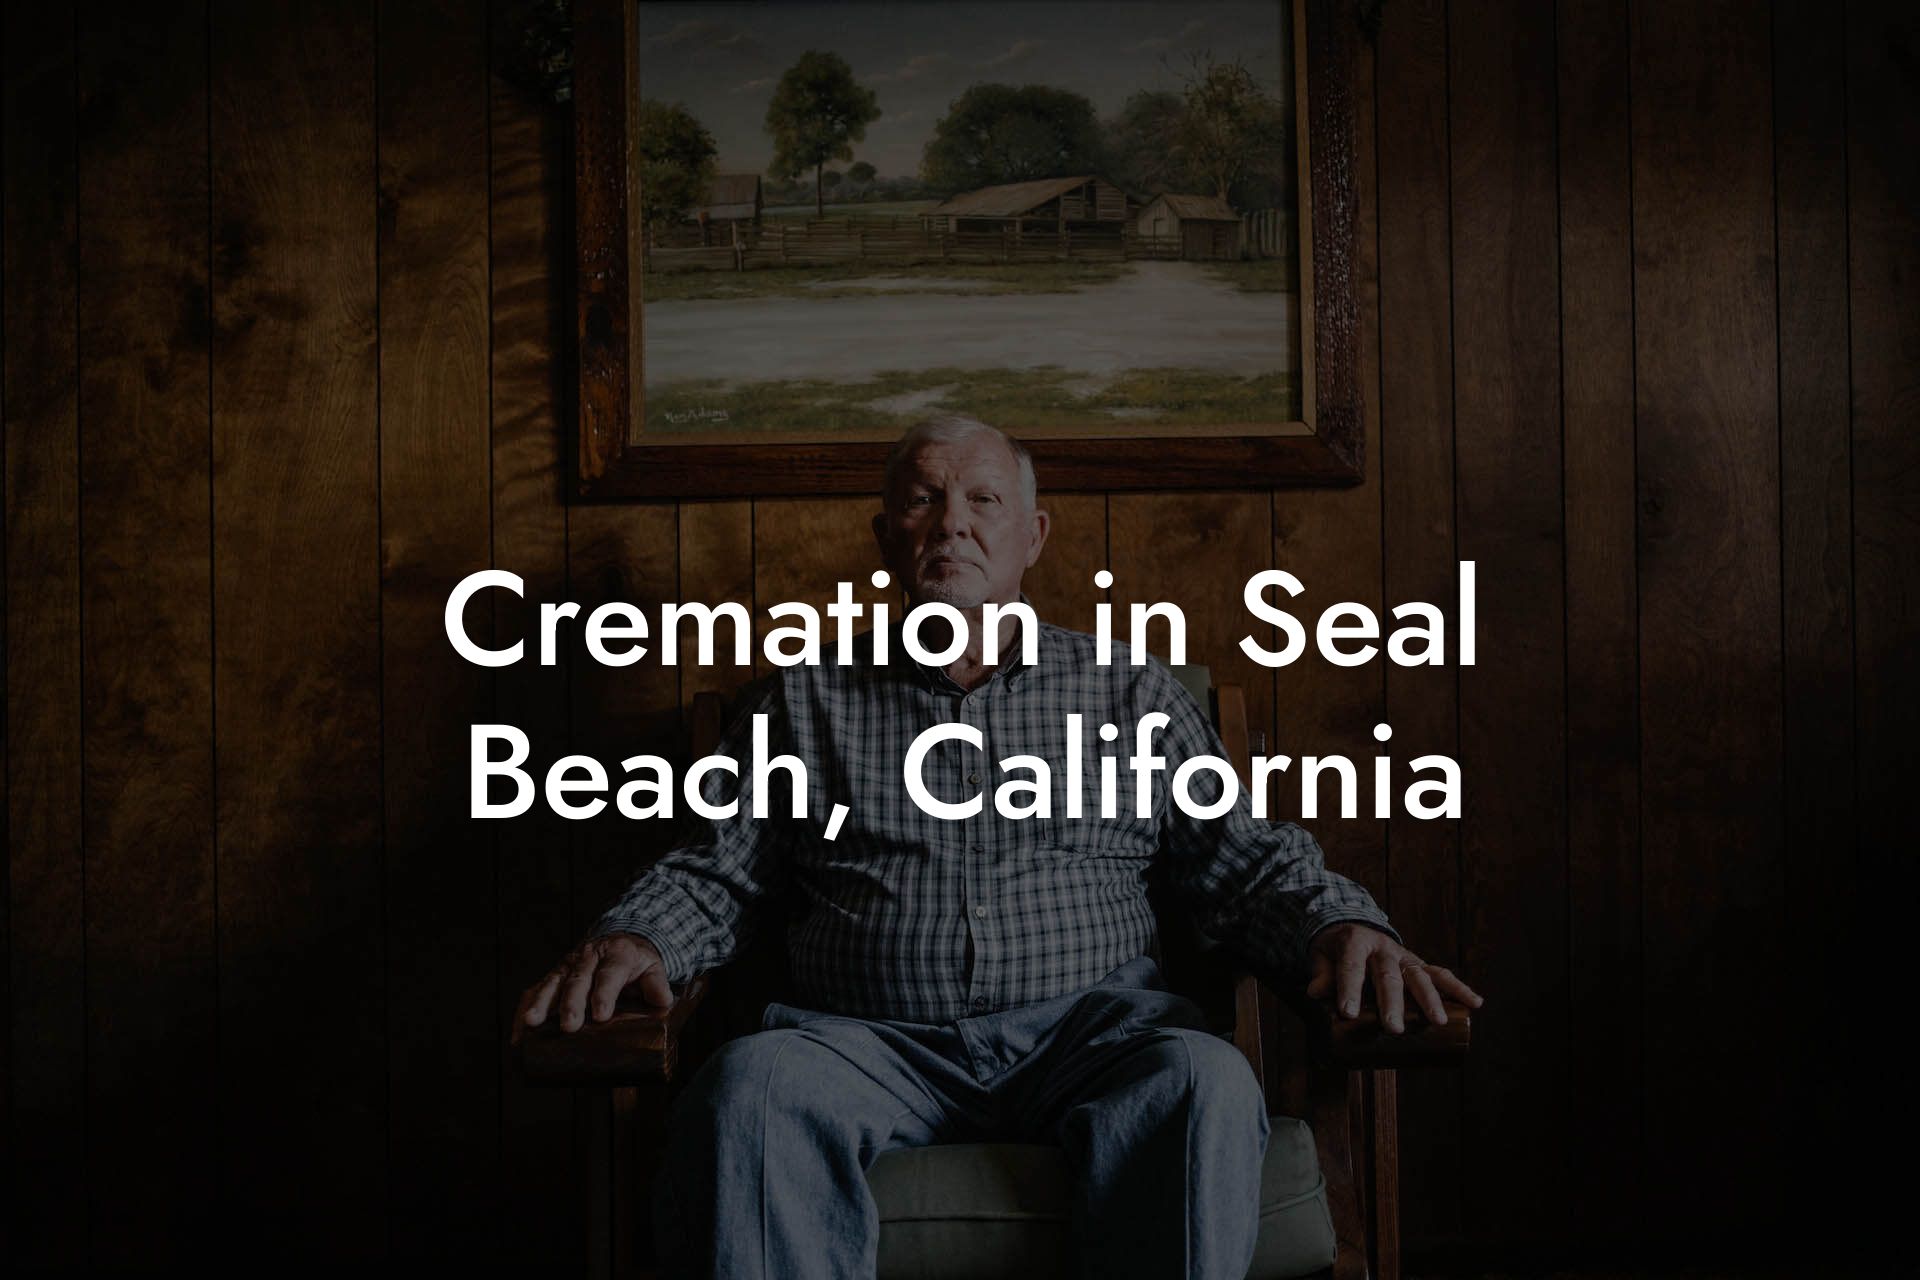 Cremation in Seal Beach, California